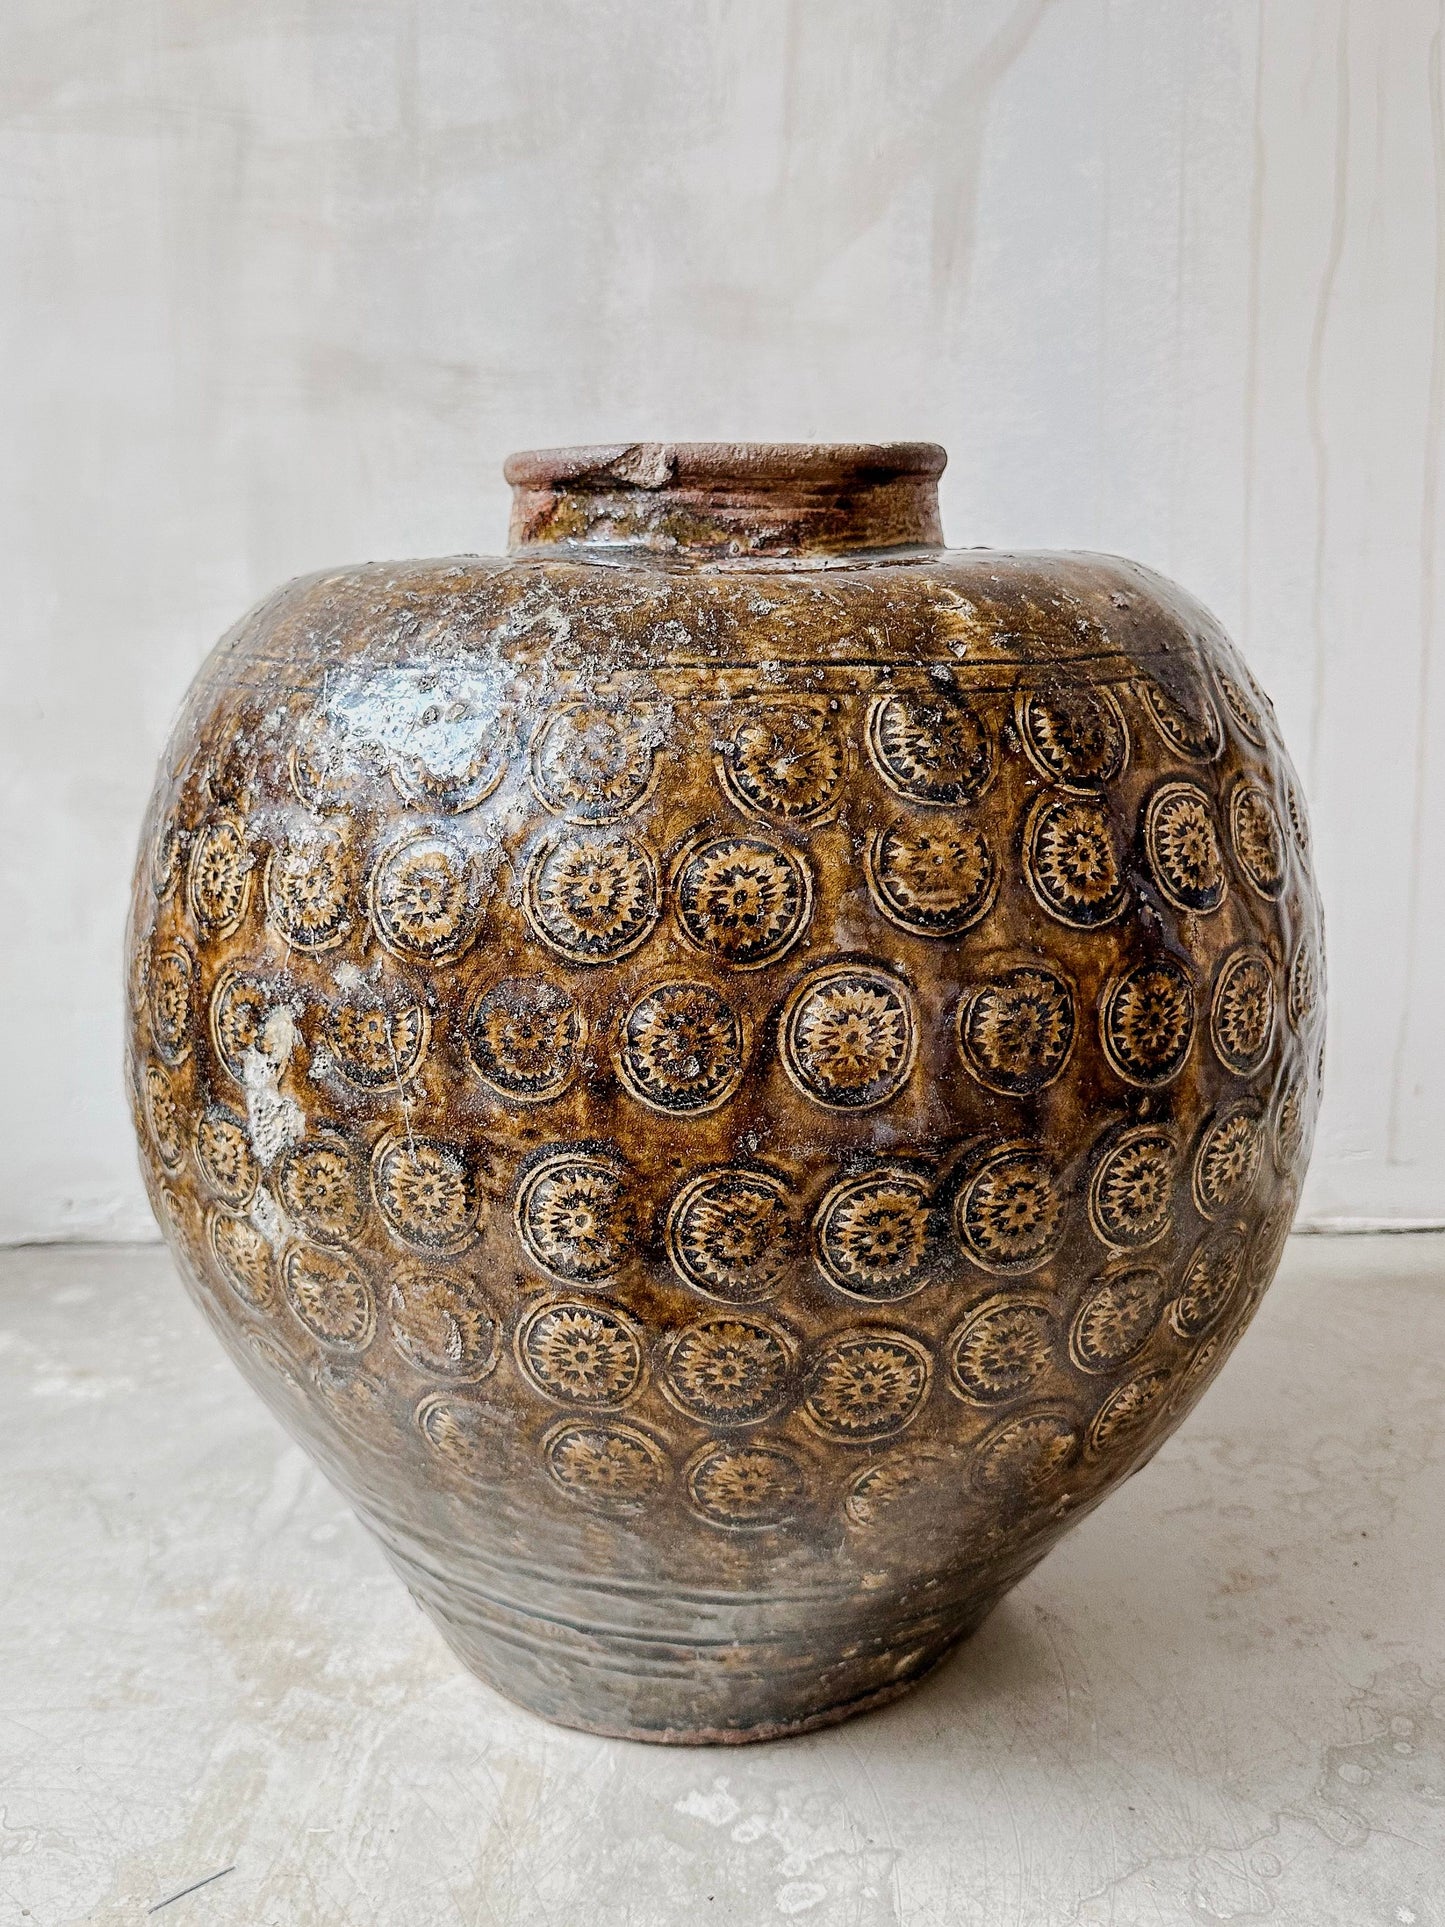 Antique seashell coin jar